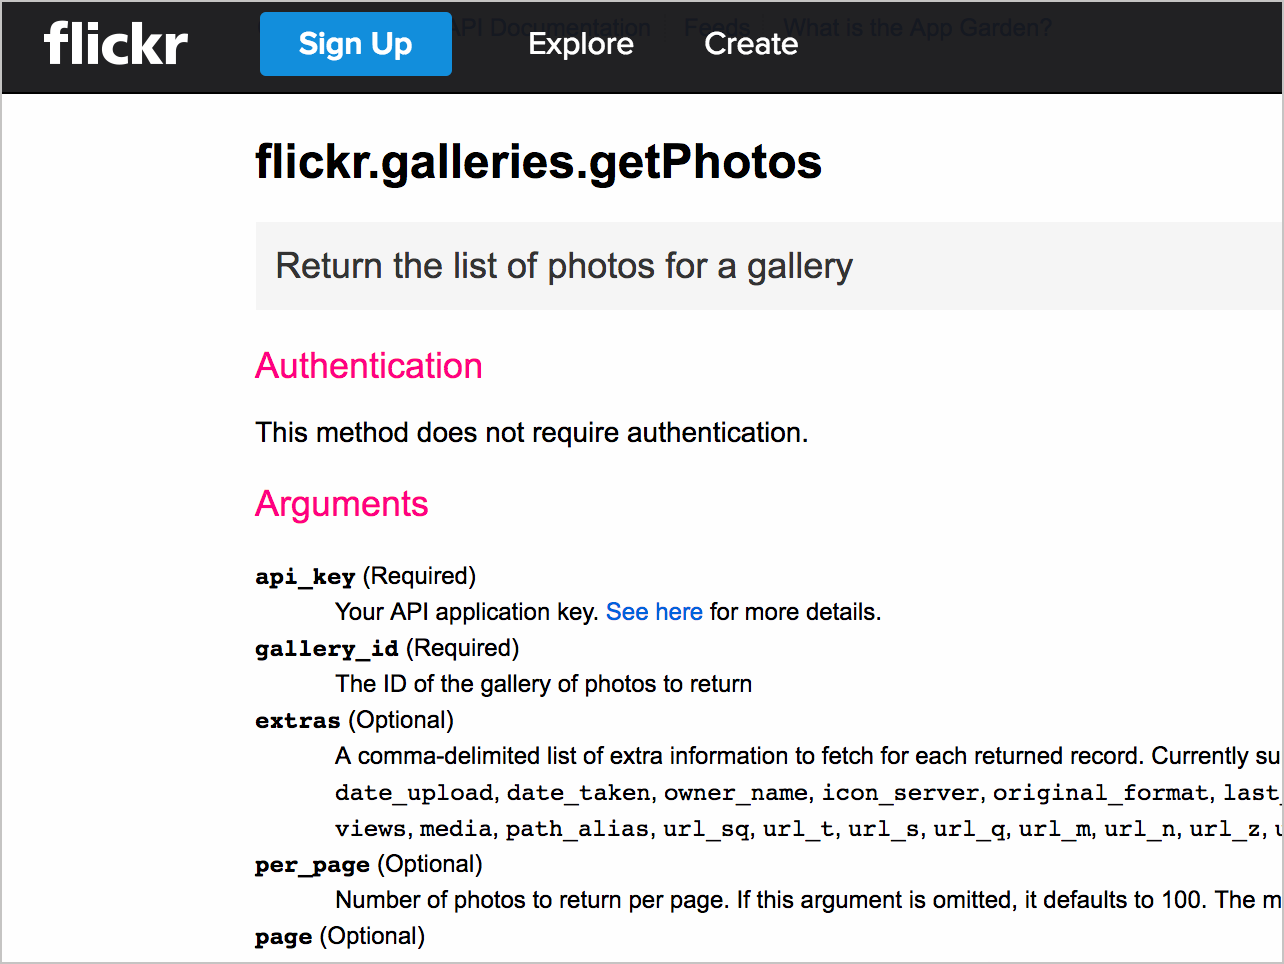 flickr.galleries.getPhotos